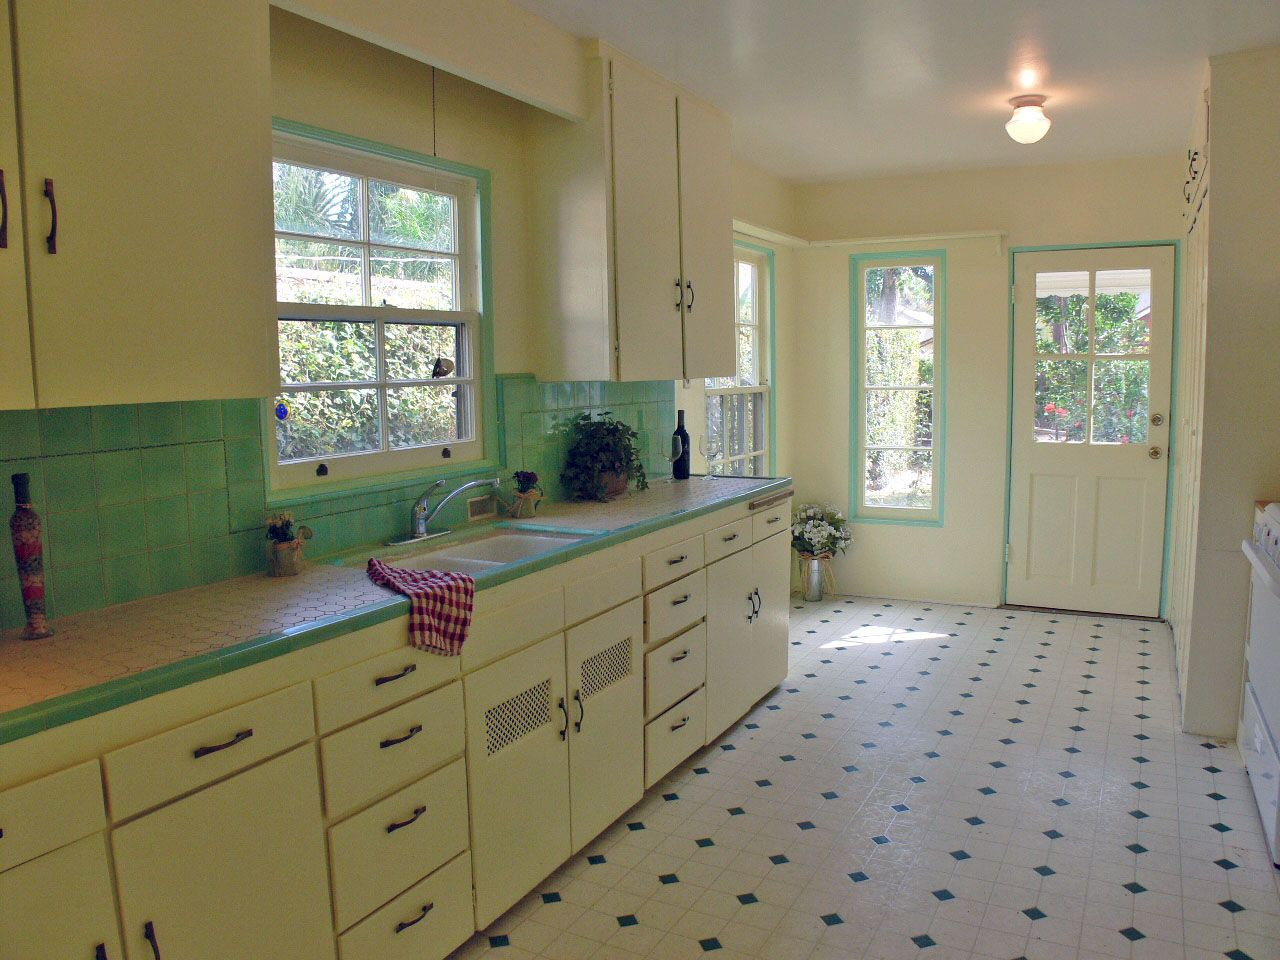 Vintage Kitchen Floor Tile
 Darling kitchen with original honey b tile countertops